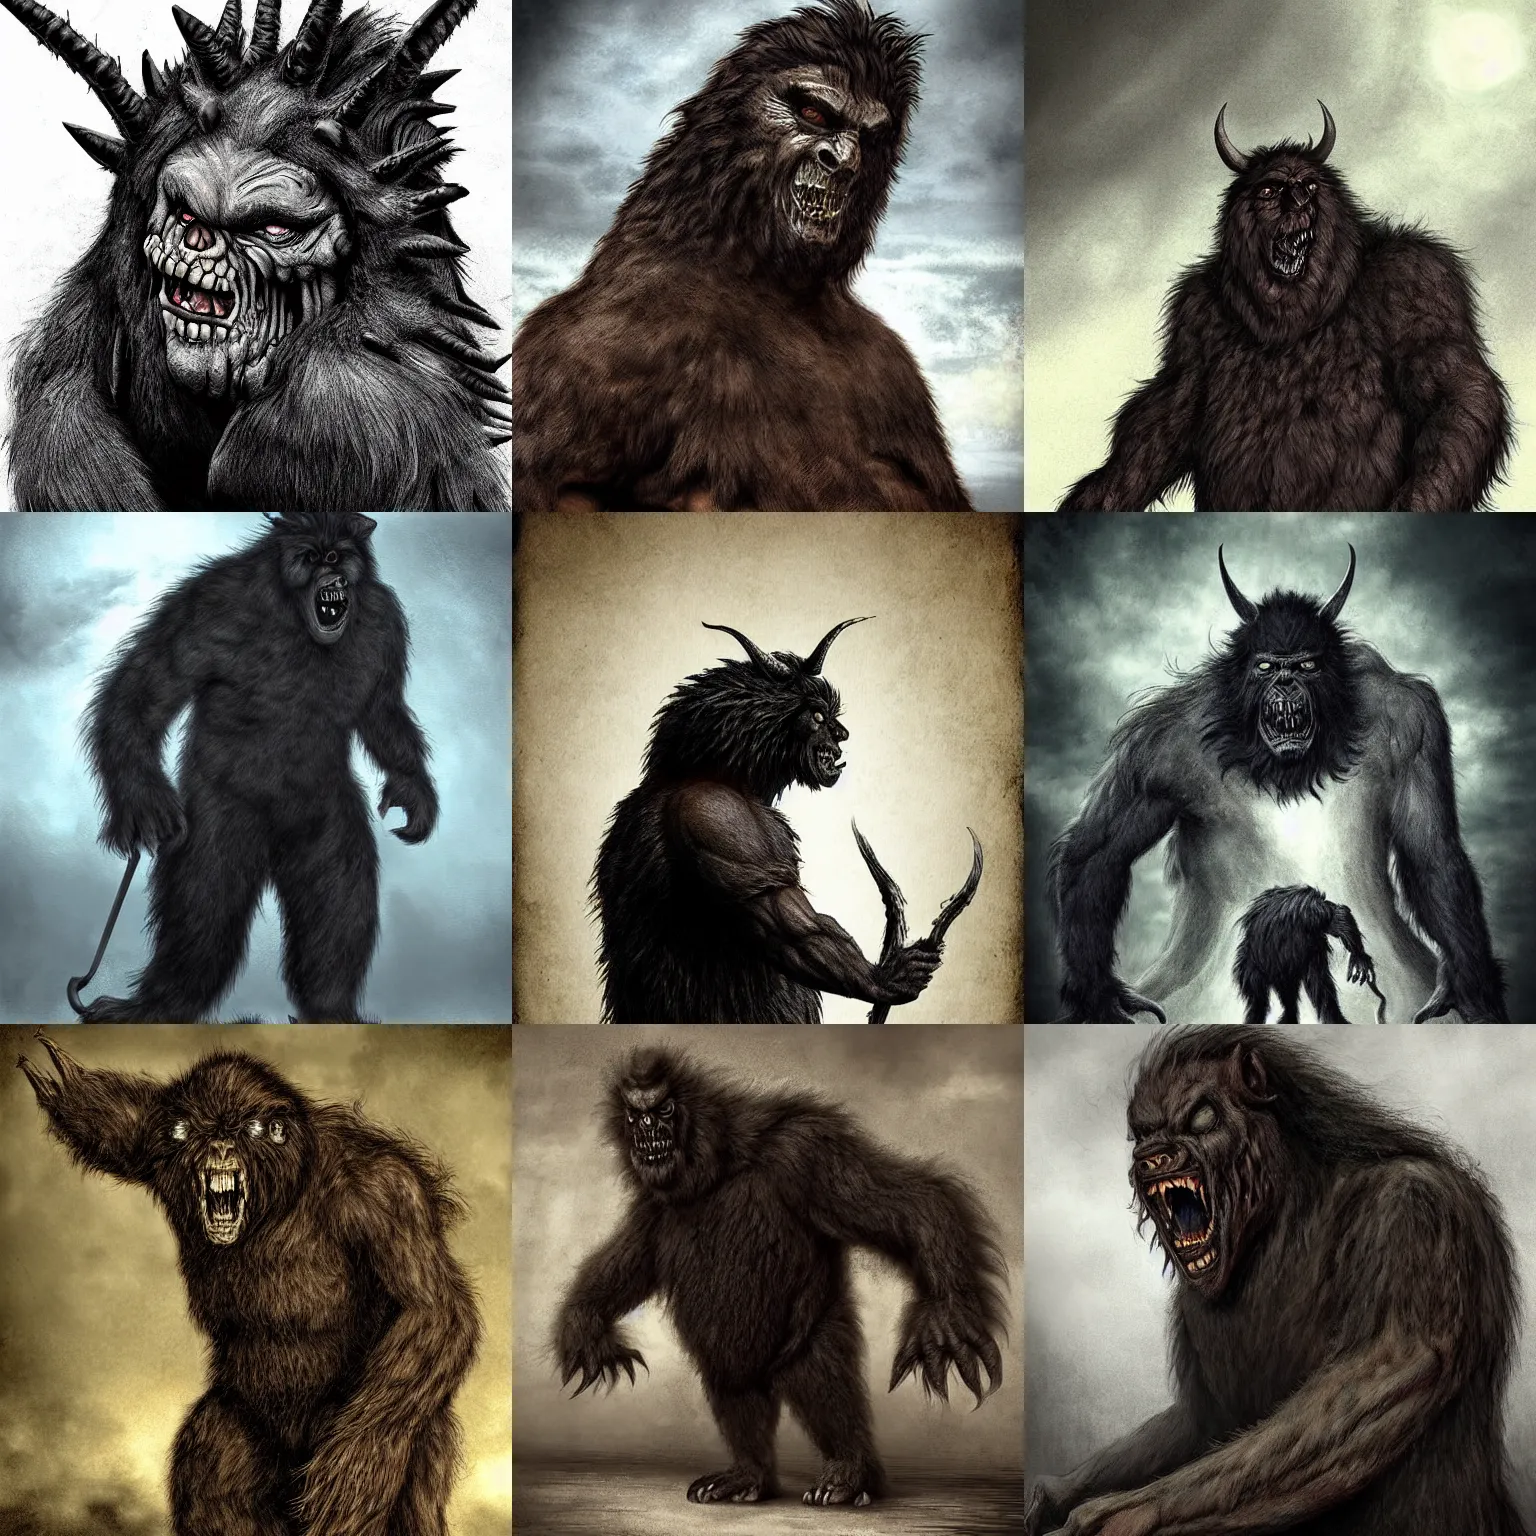 Prompt: monster, dark, big, beast, hairy, fur, tall, gargantuan, digital art, human, medieval era, scary